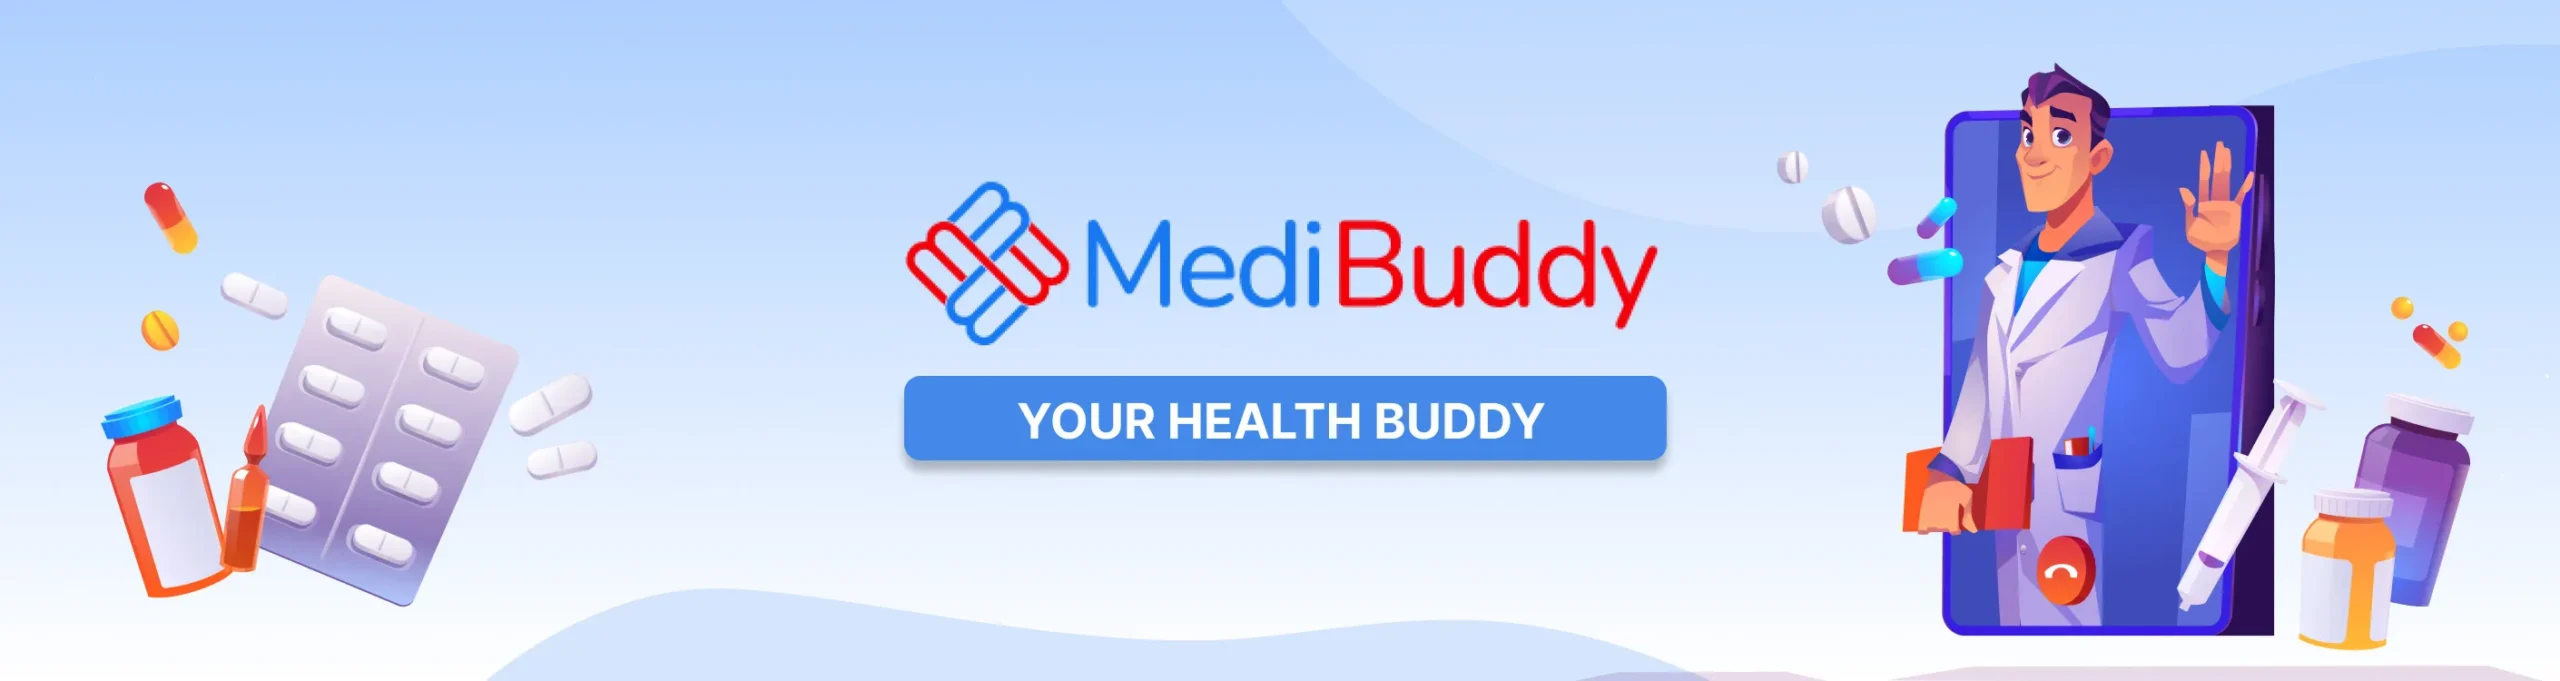 Medi Buddy - Medi Buddy Medicine : Get Upto 96% OFF